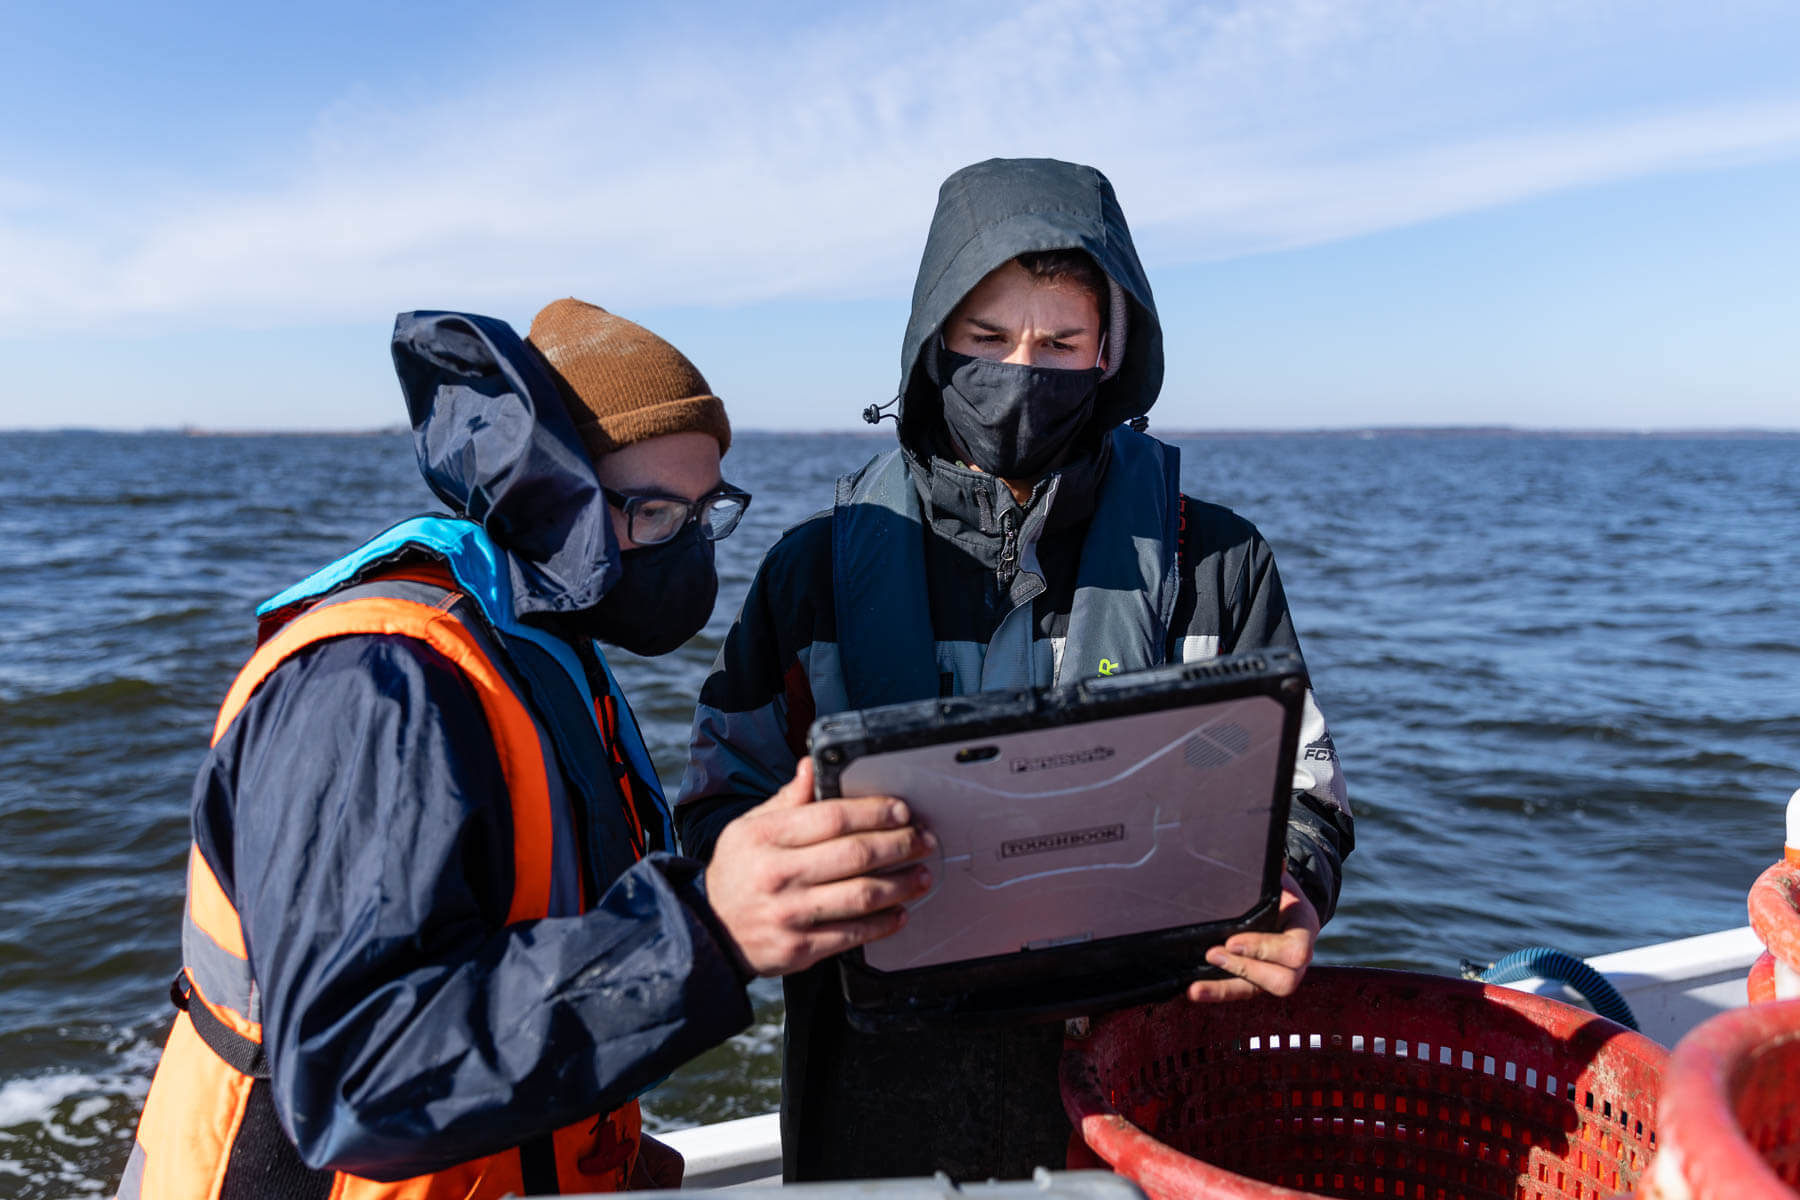 Technicians focus on laptop onboard workboat